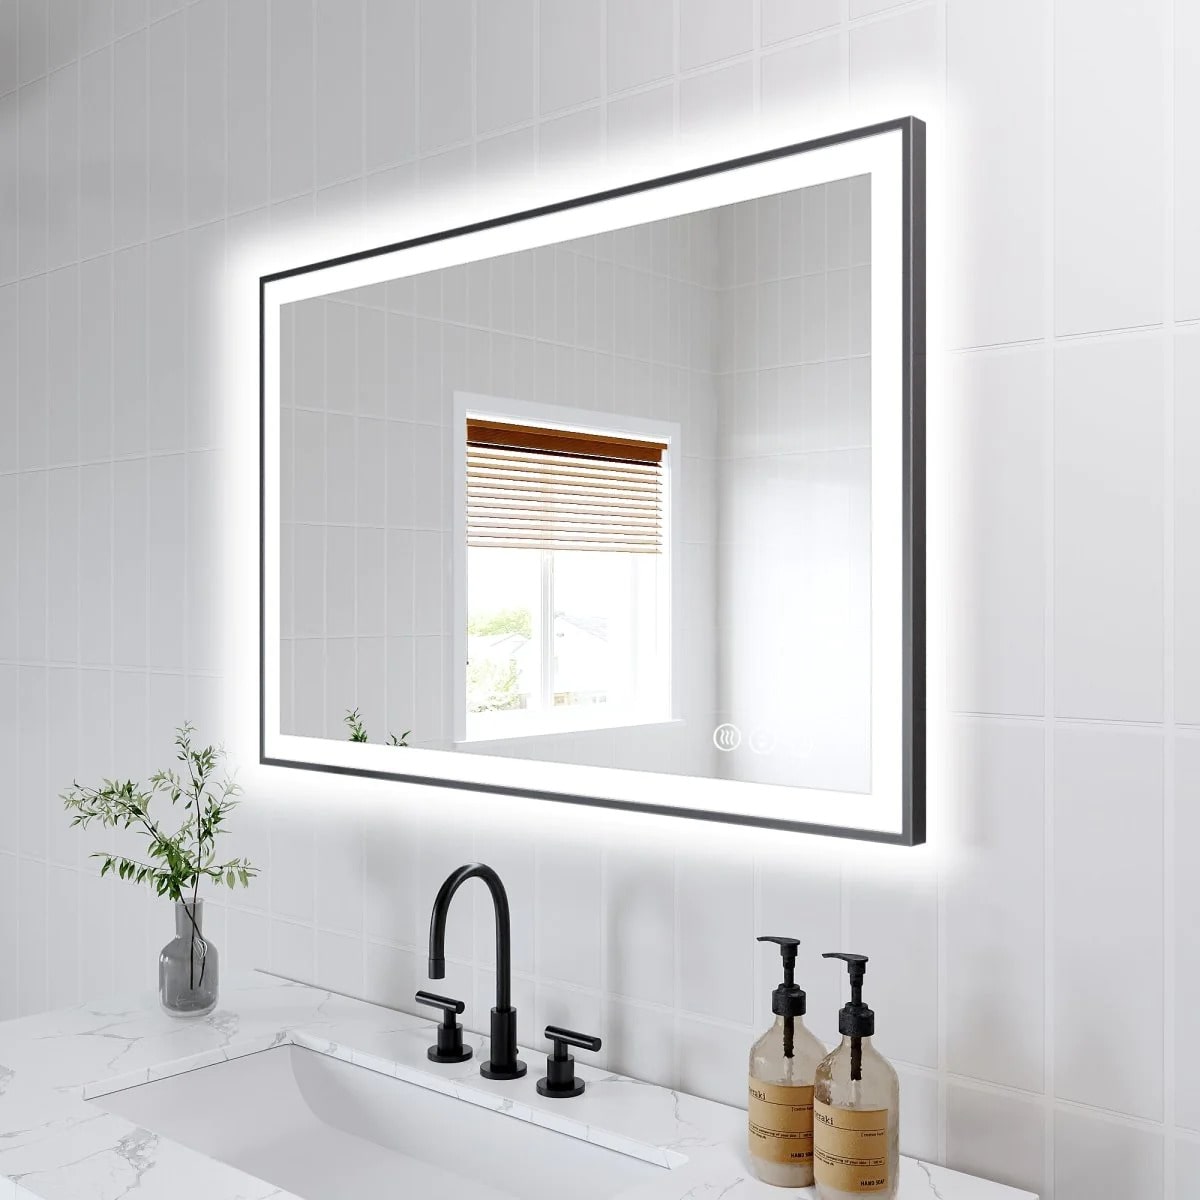 Apex-Noir 24"x36" LED Mirror